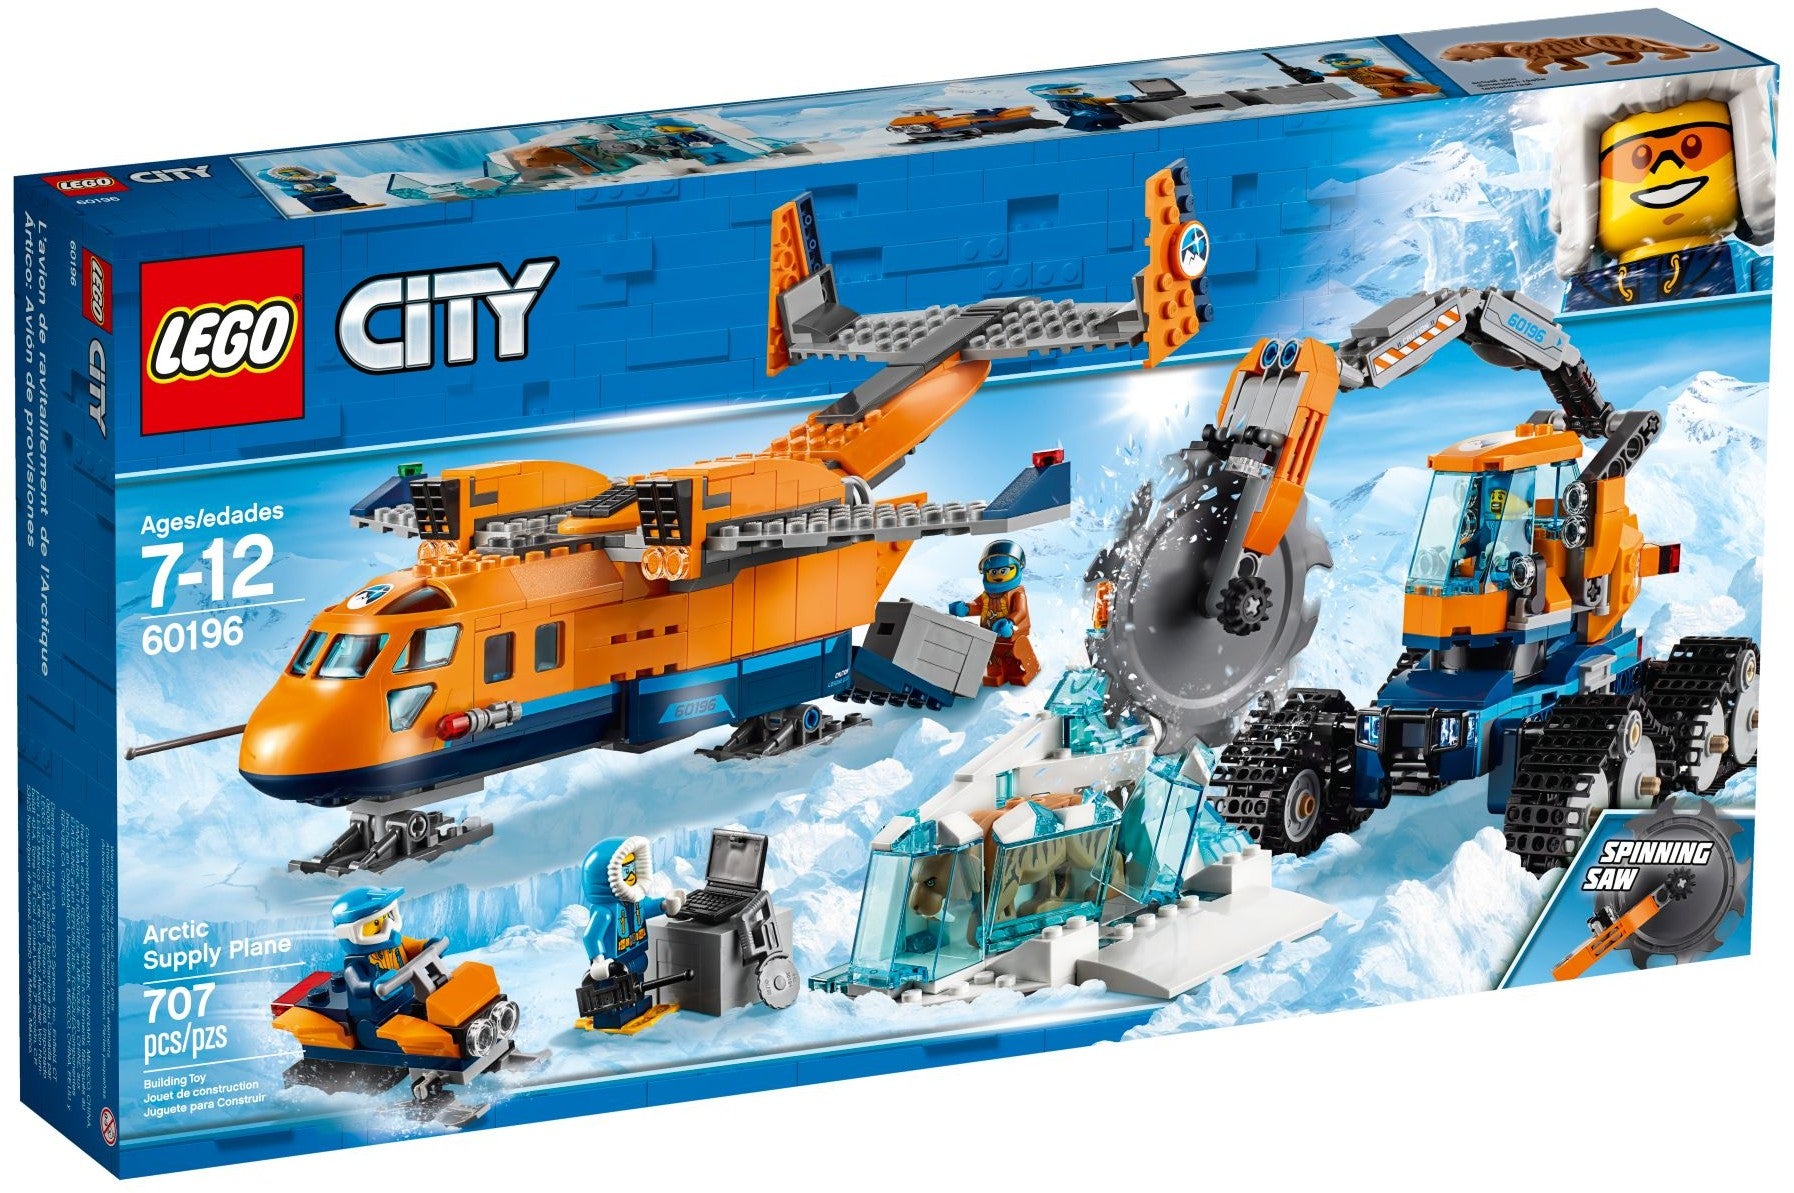 Lego City 60196 - Arctic Supply Plane